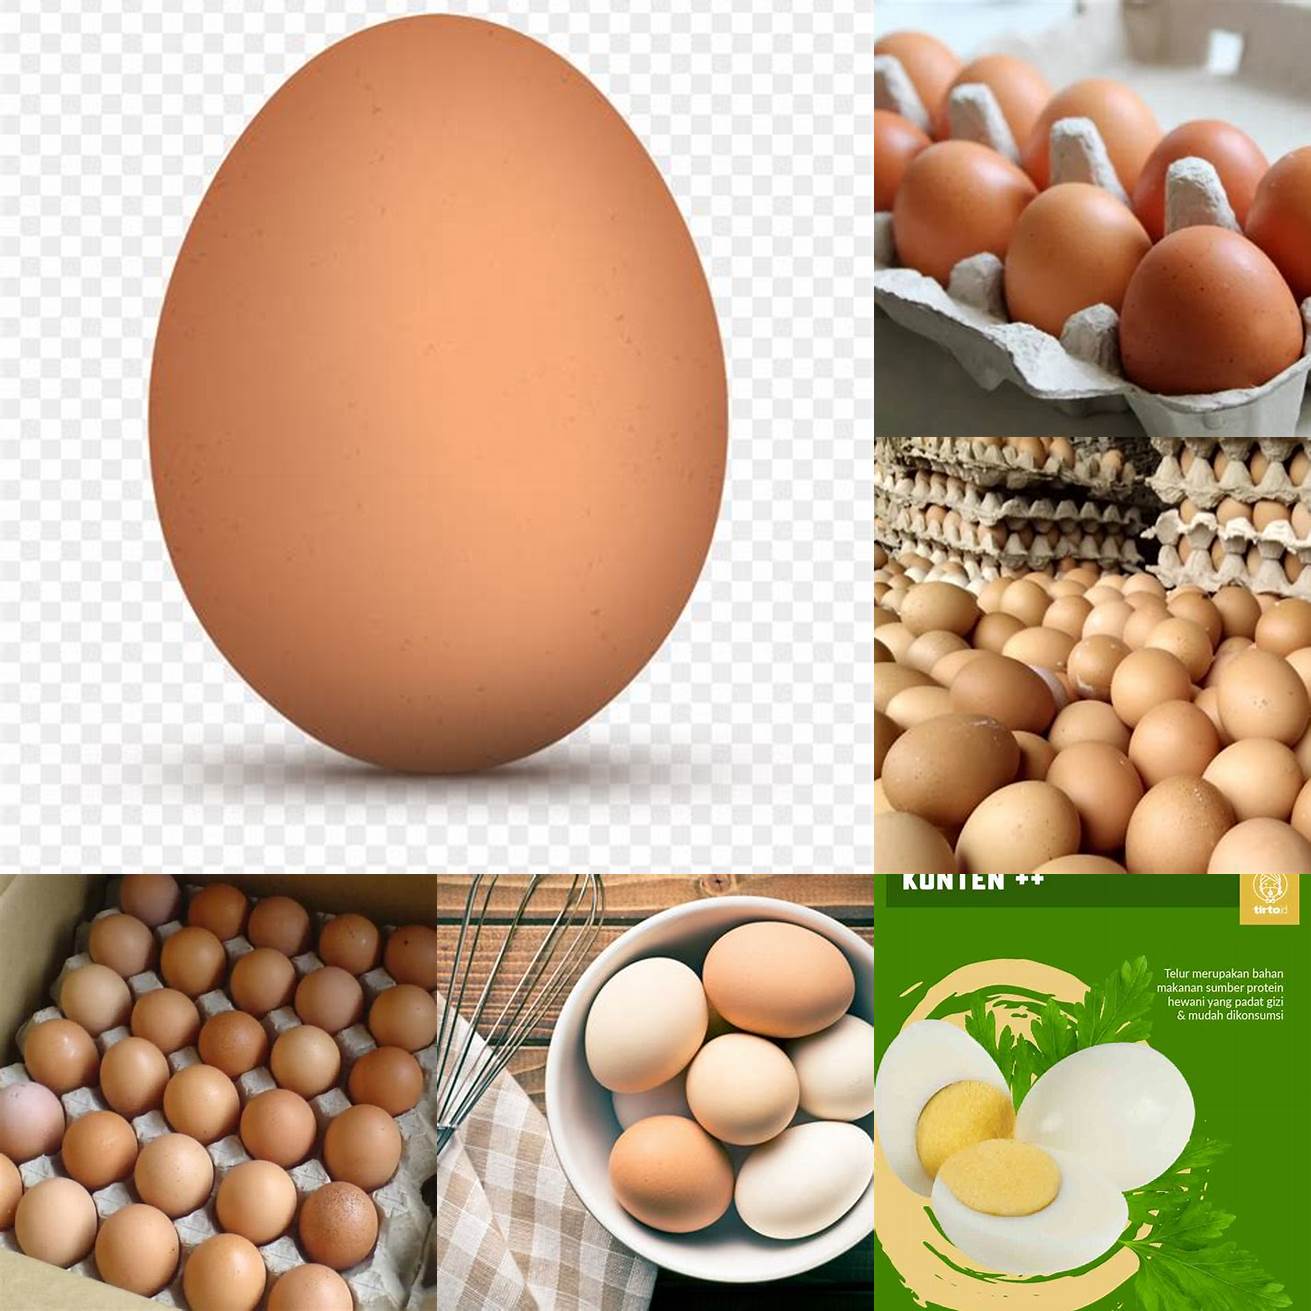 1 butir telur ayam